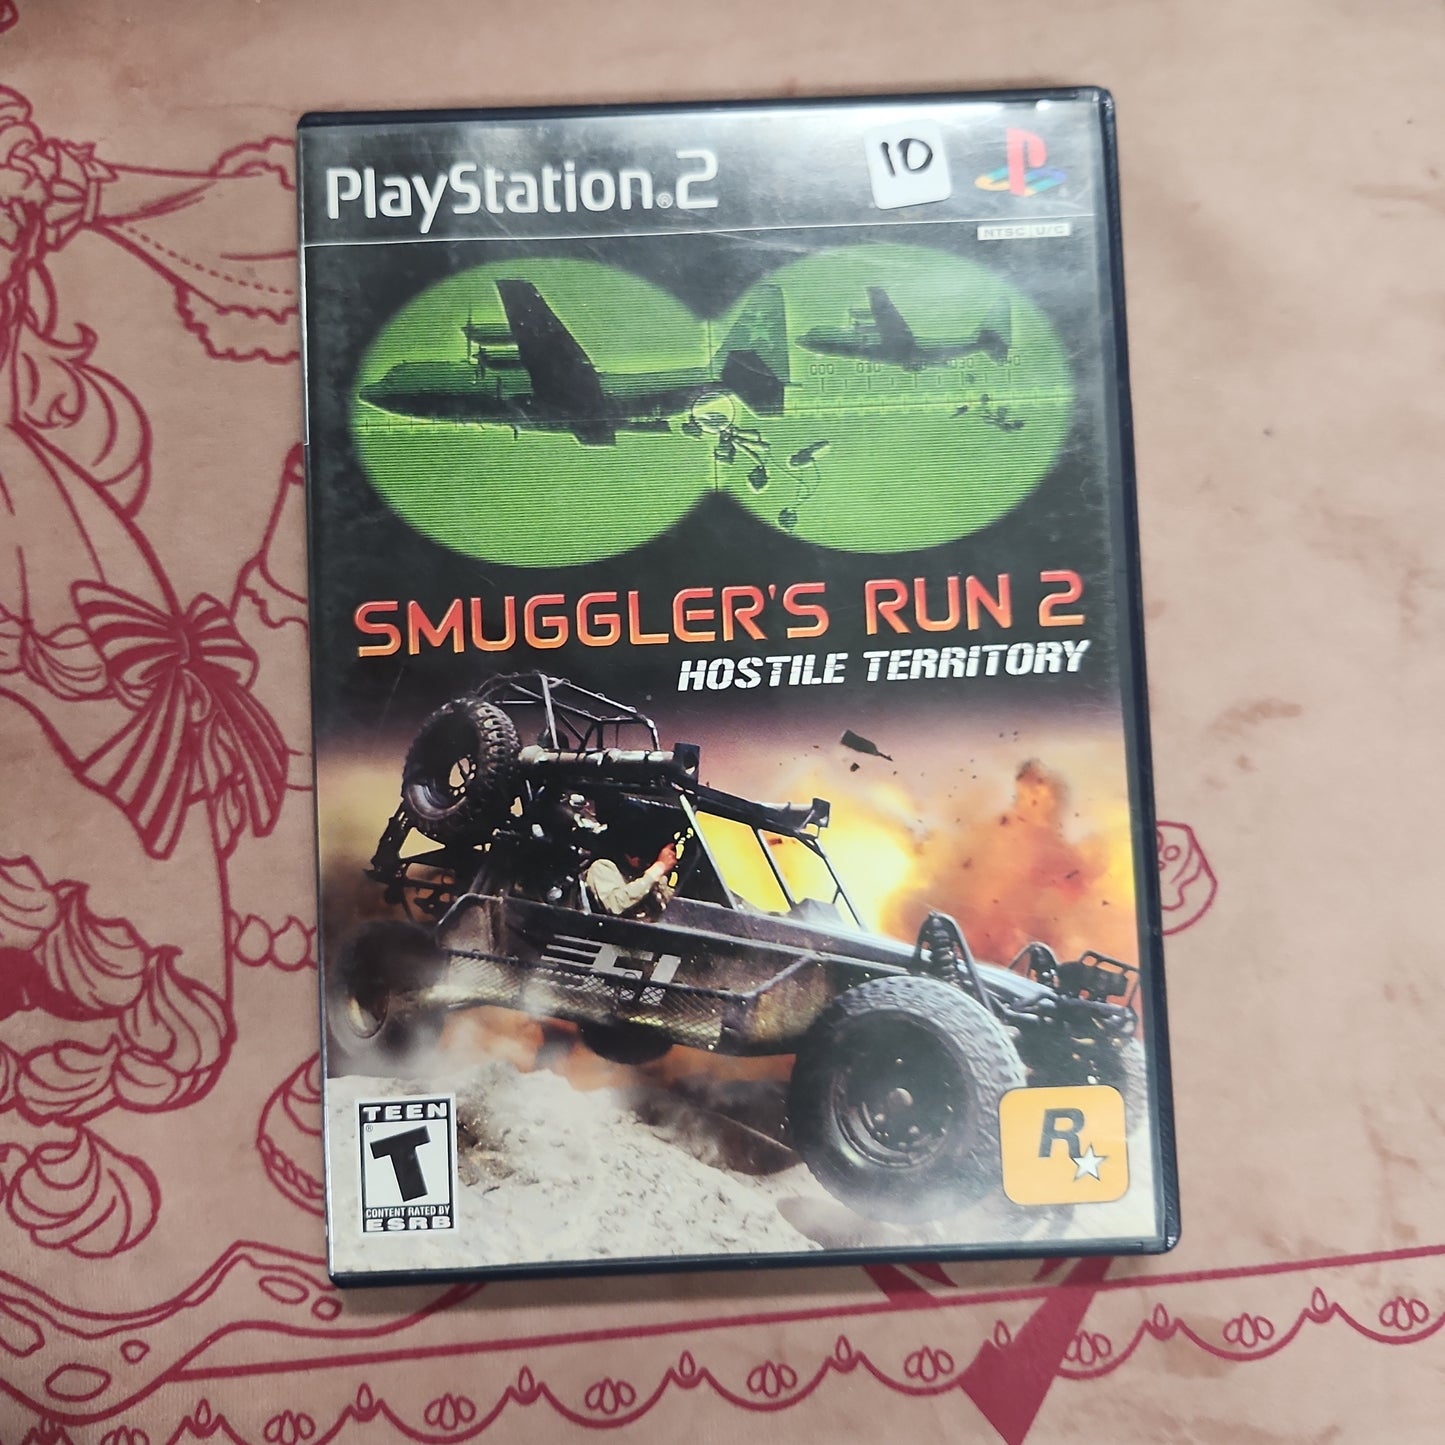 Smuggler's Run 2 Hostile Territory - Playstation 2 (Complete)